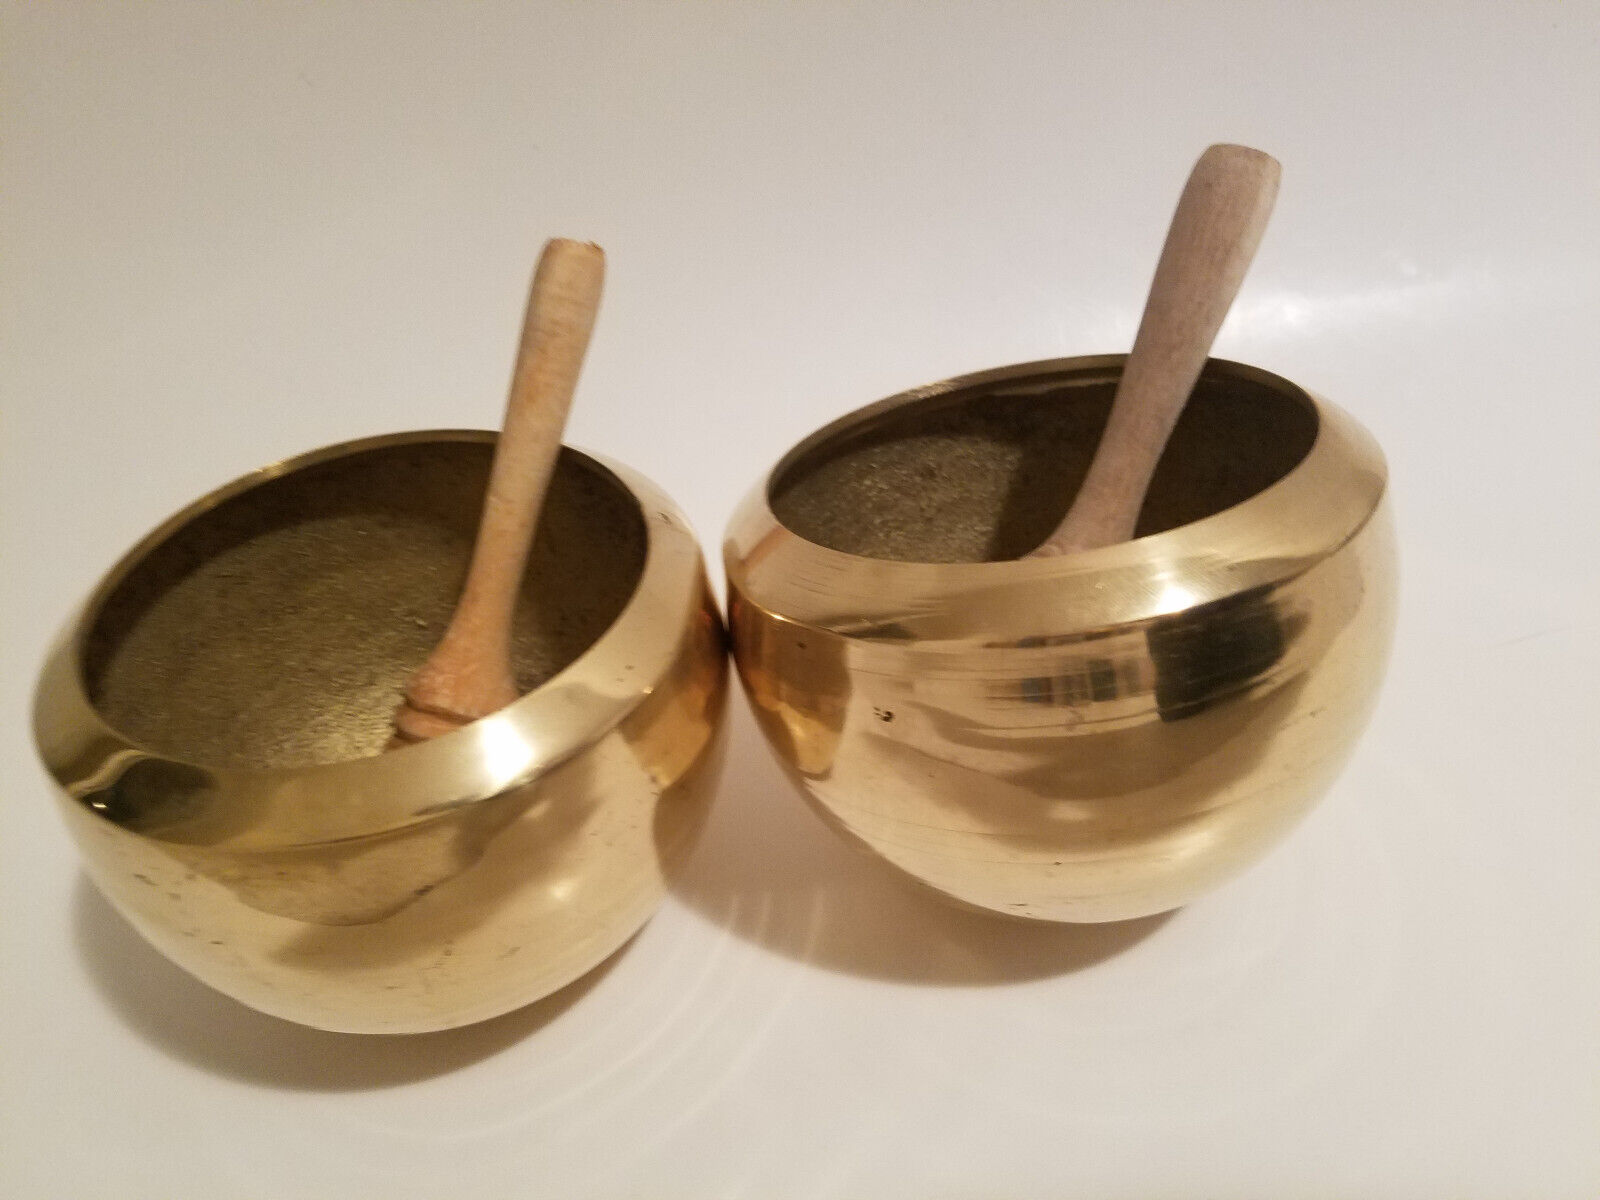 2 Singing bowls, 4 Inch brass, & mallets